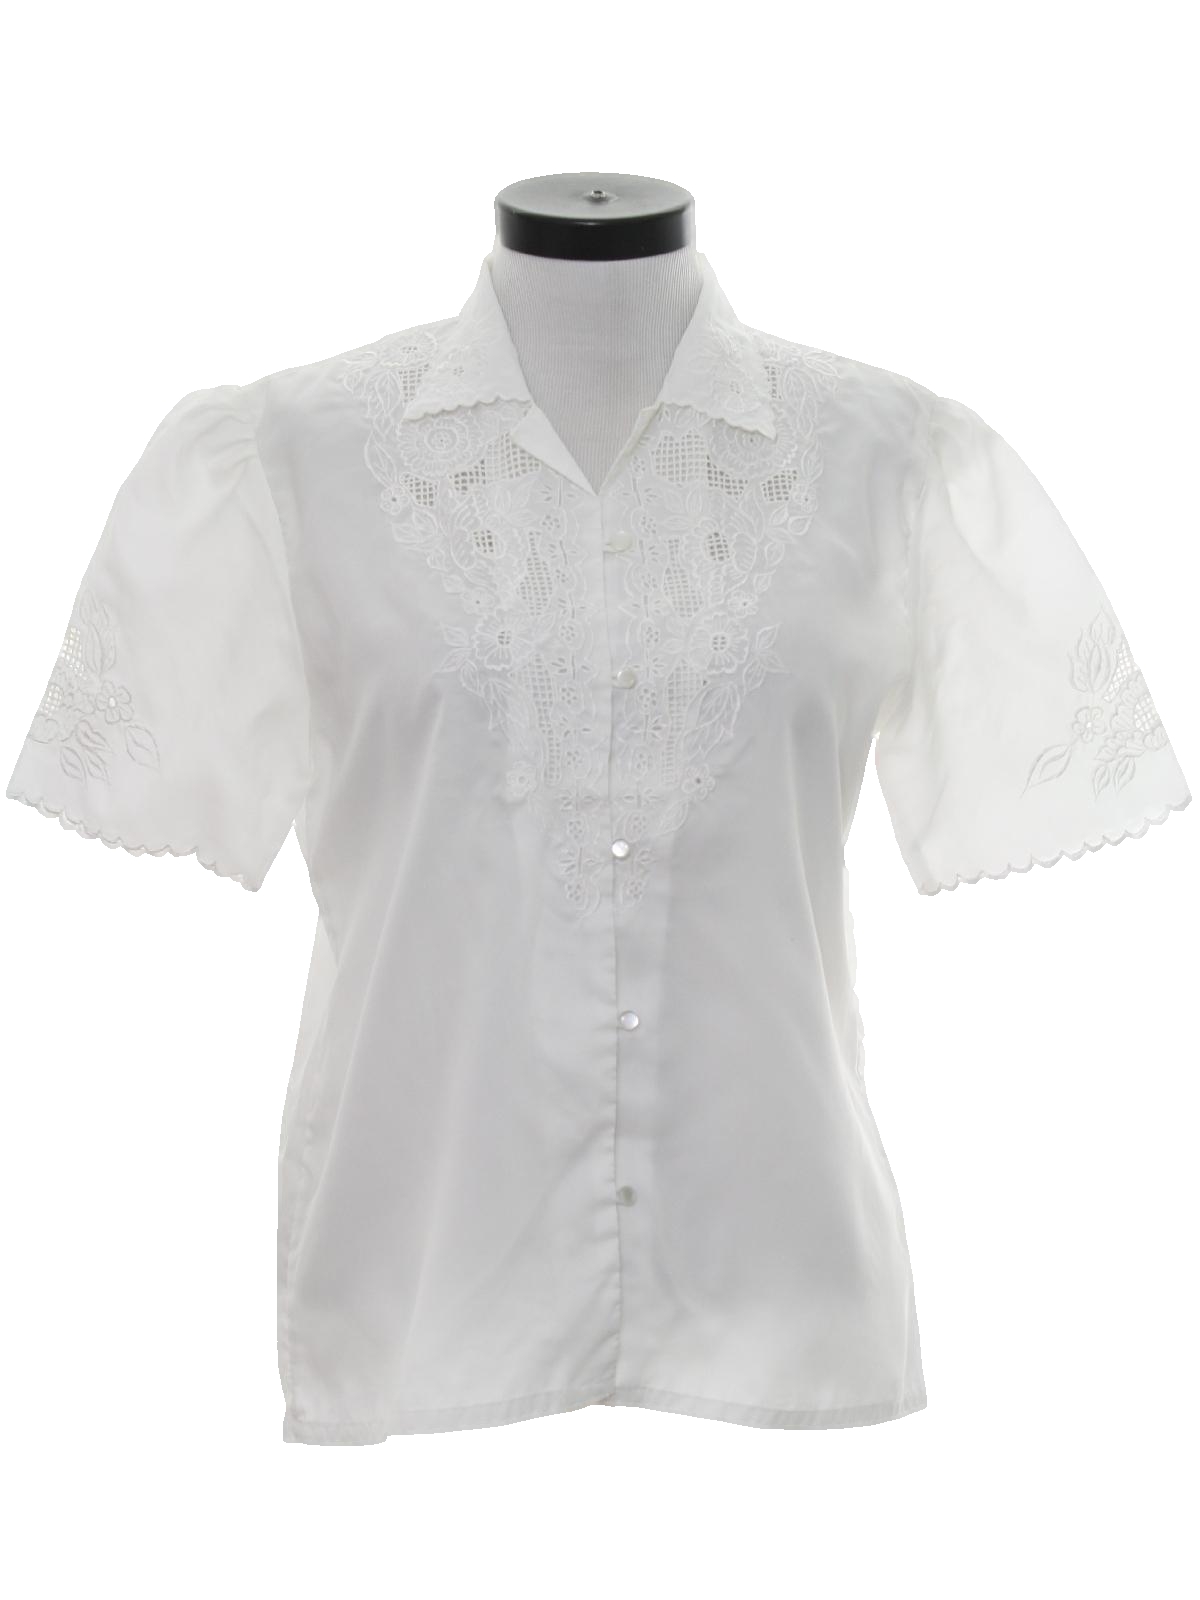 Retro 1980's Shirt: 80s -no label- Womens white silky polyester short ...